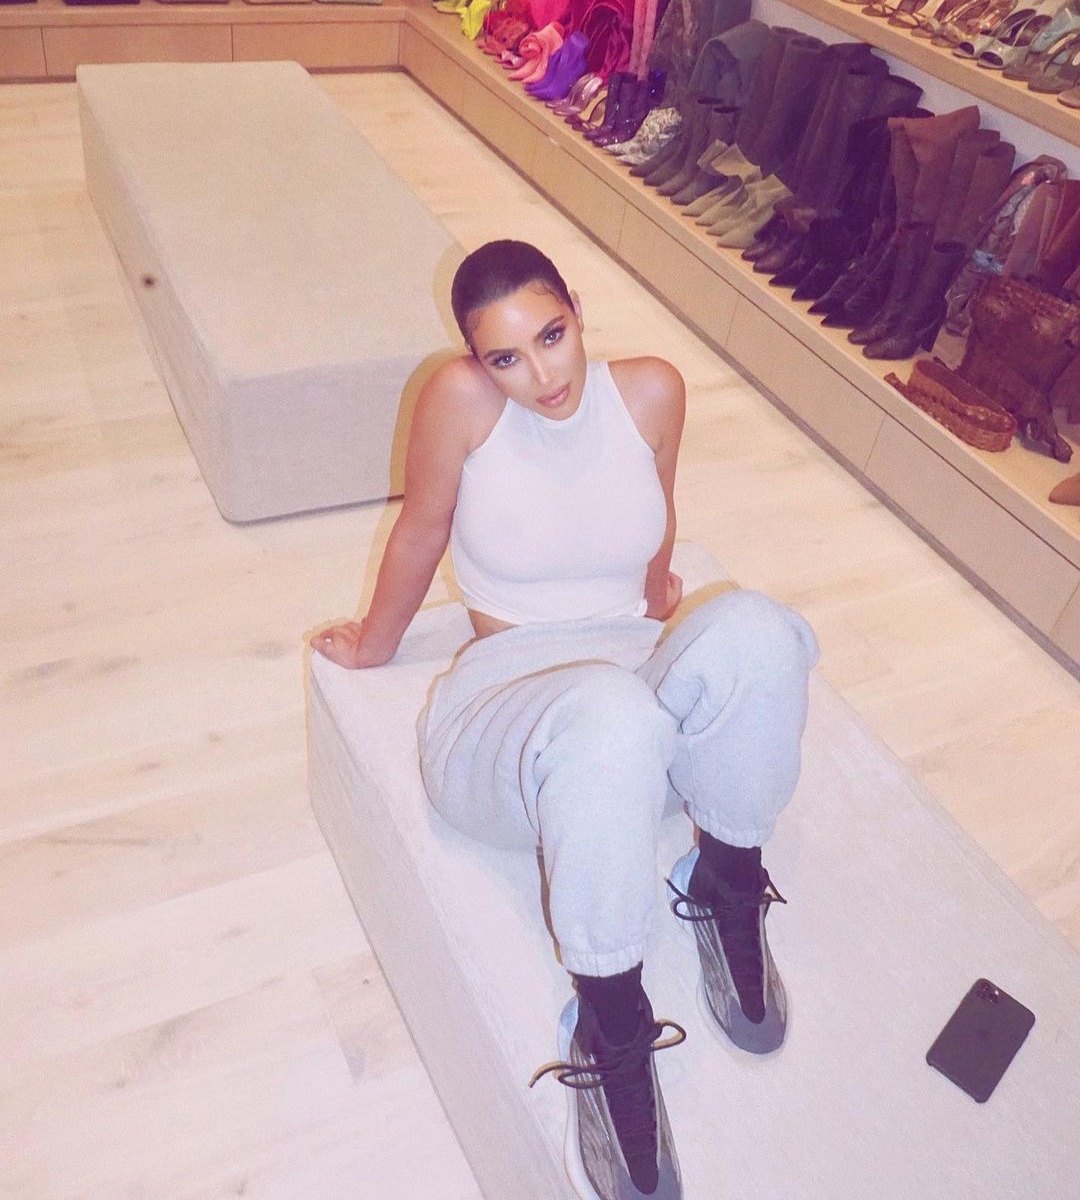 Kim Kardashian strikes a pose in her cavernous closet